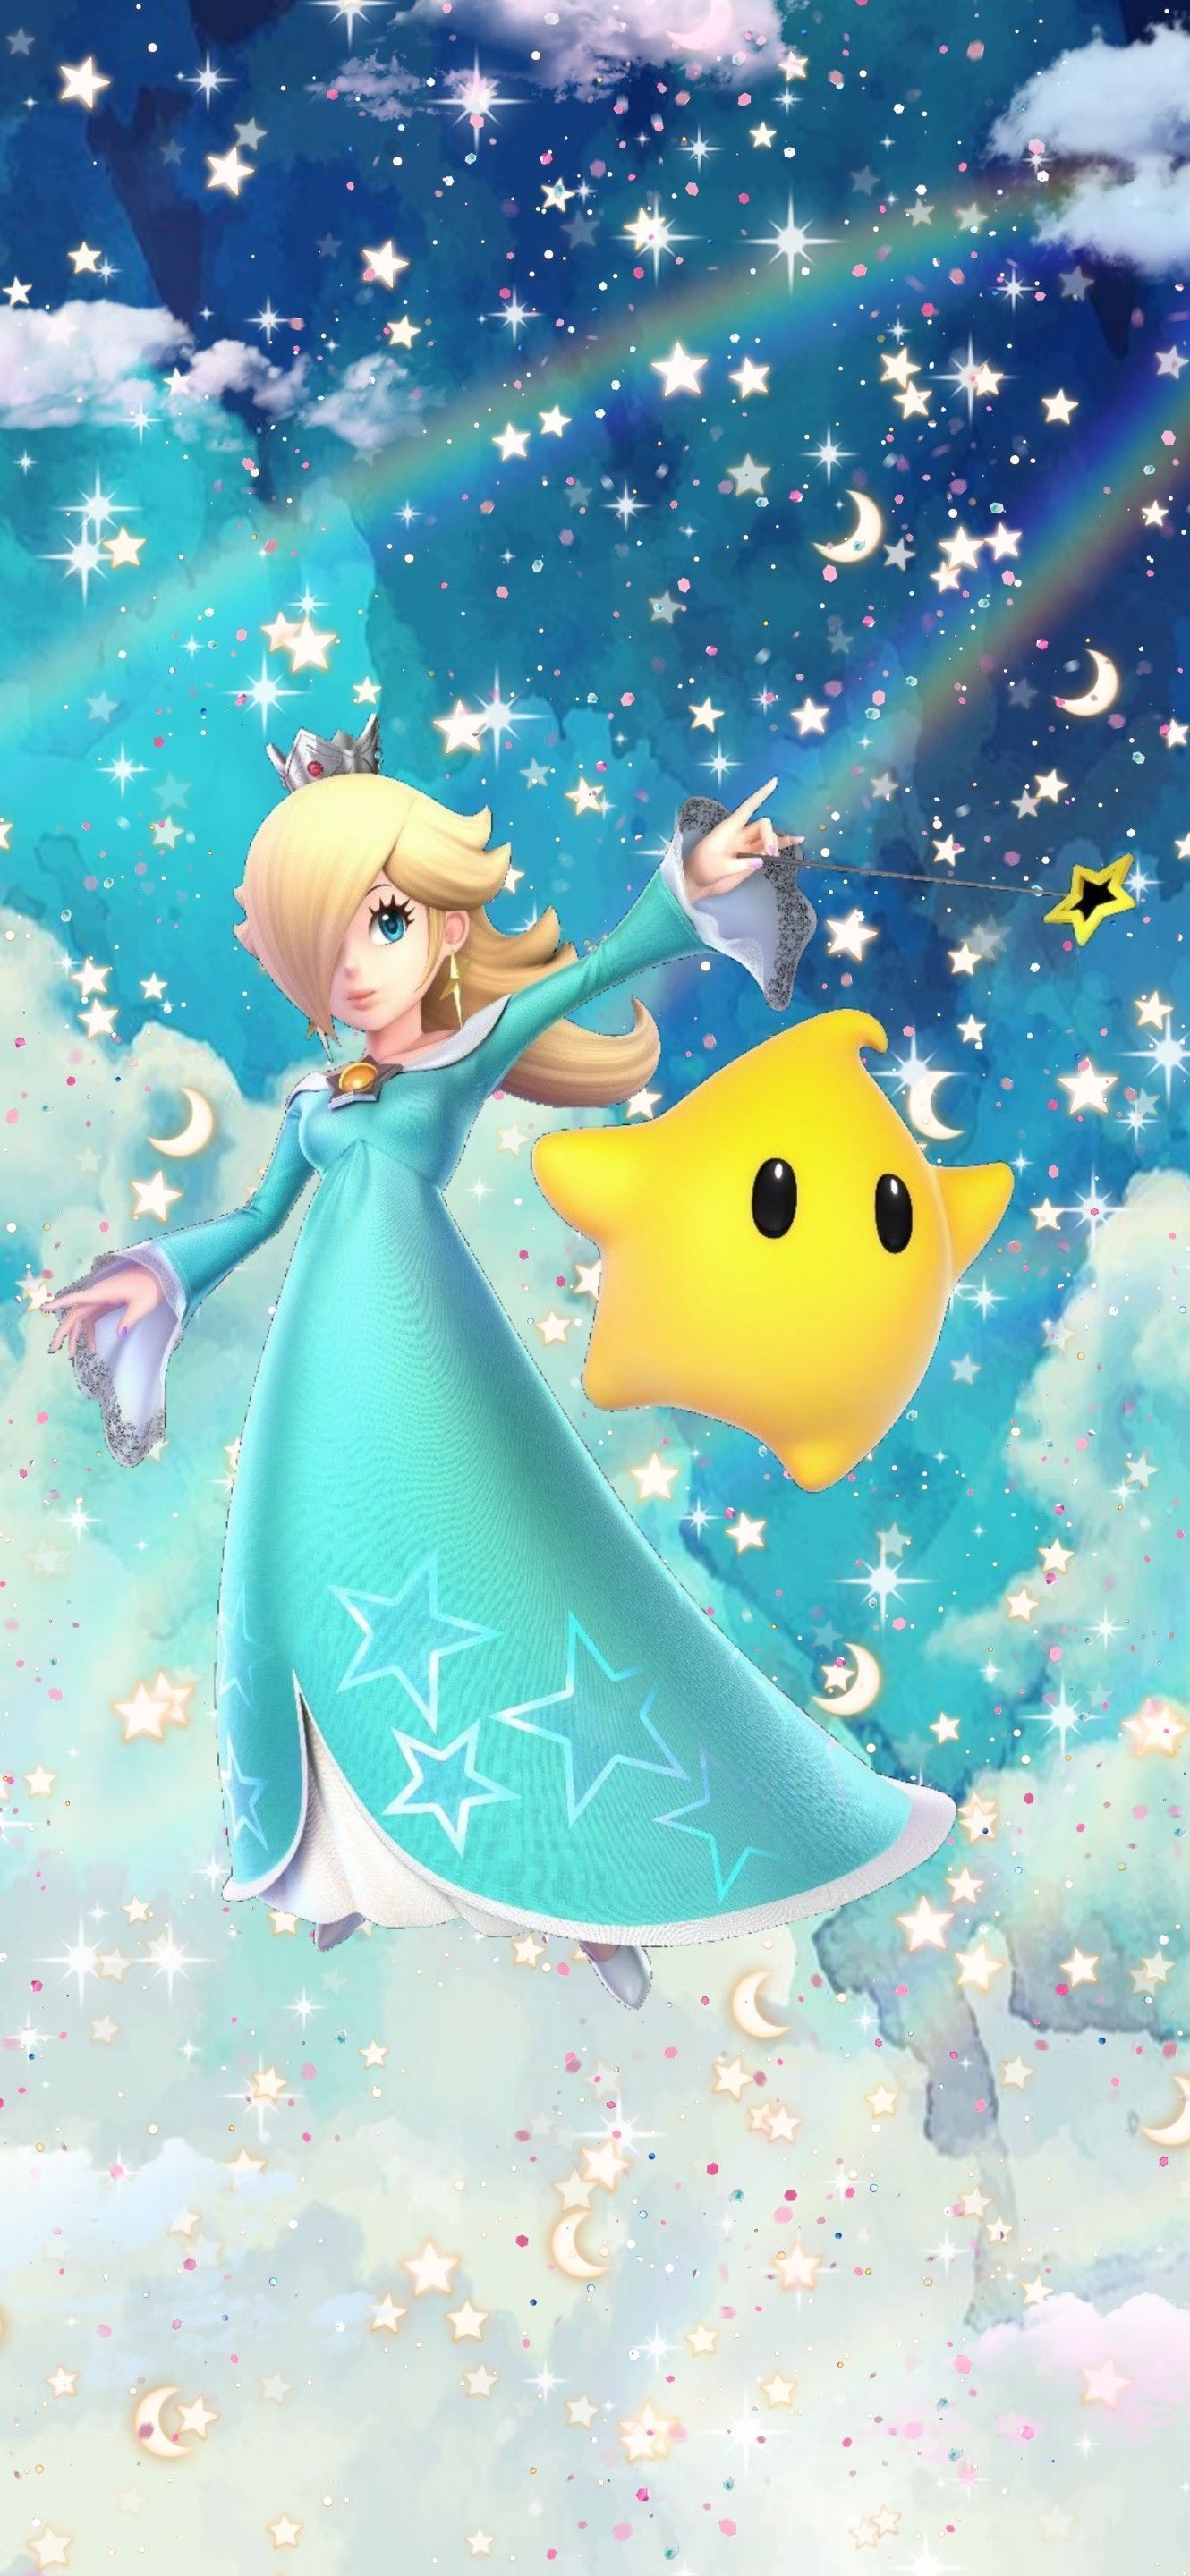 Nintendo Princess Rosalina blue aesthetic Phone Wallpaper. Anime wallpaper, Princess wallpaper, Wallpaper